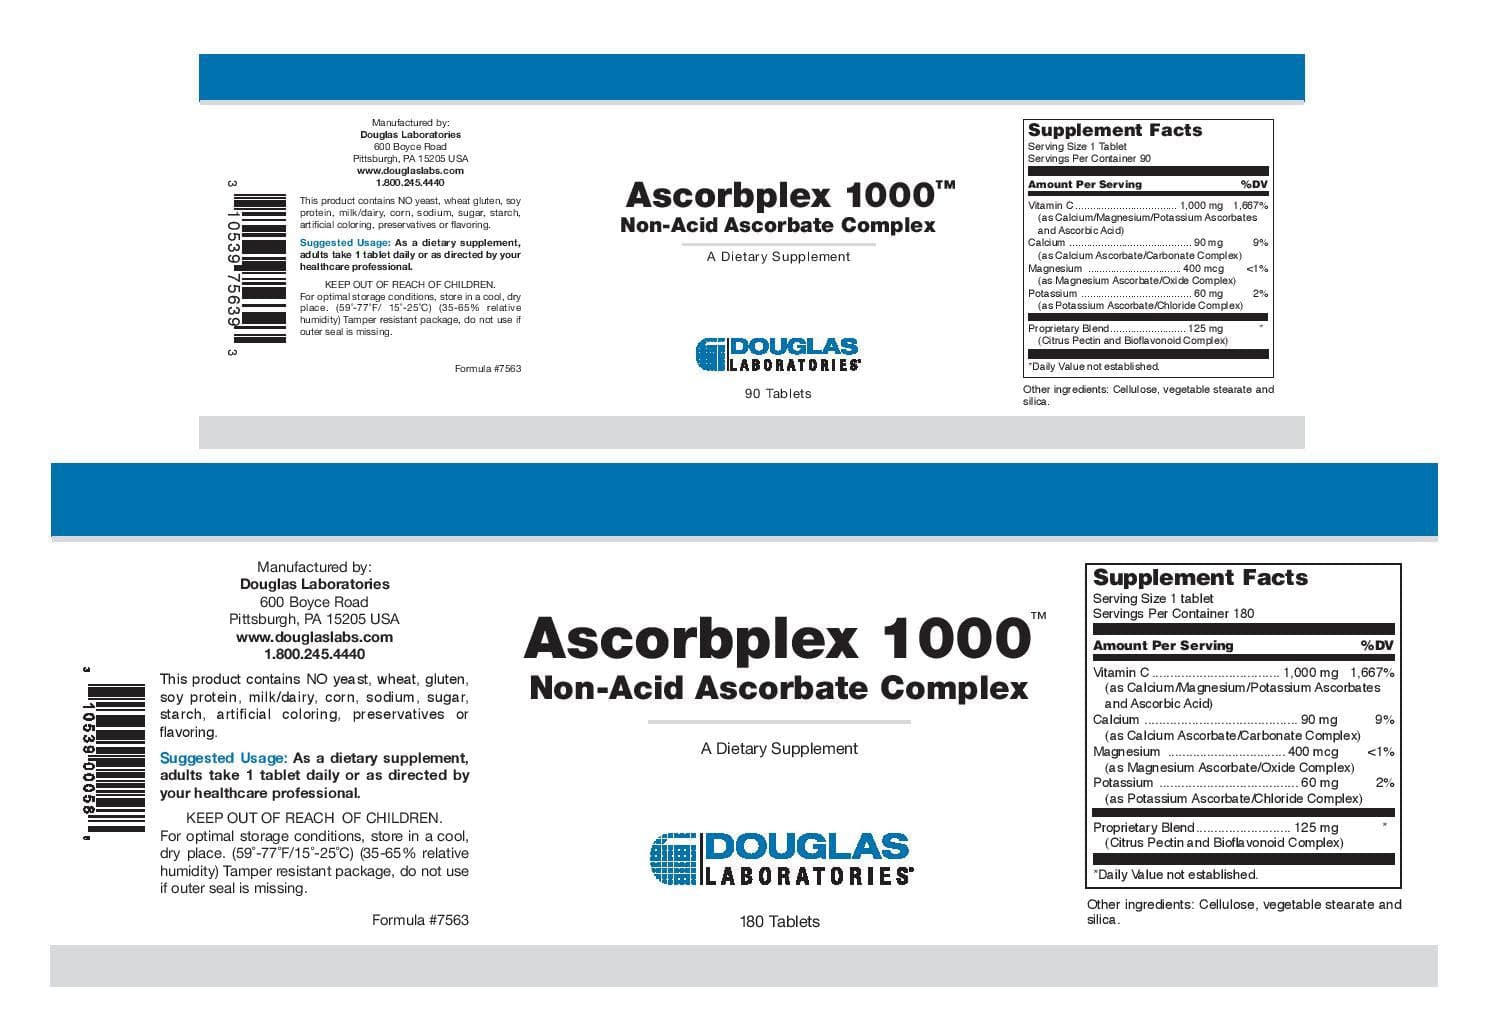 Douglas Laboratories Ascorbplex 1000